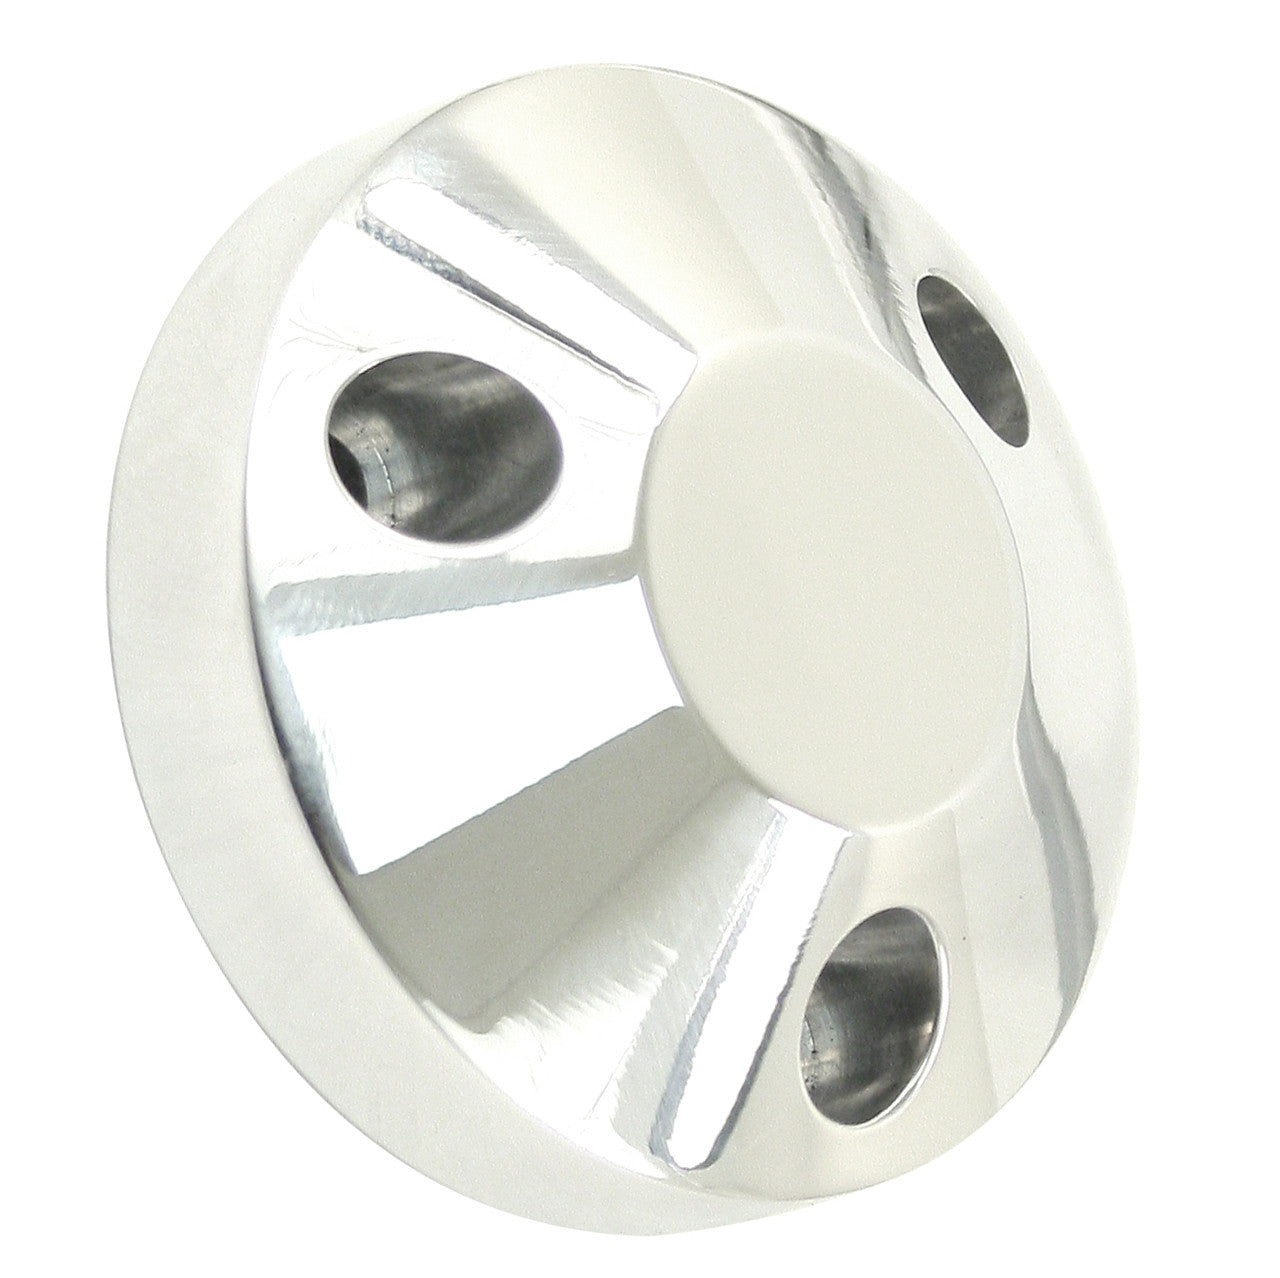 Aluminum 3 Bolt Center Cap For Steel Or Aluminum Steering Wheels